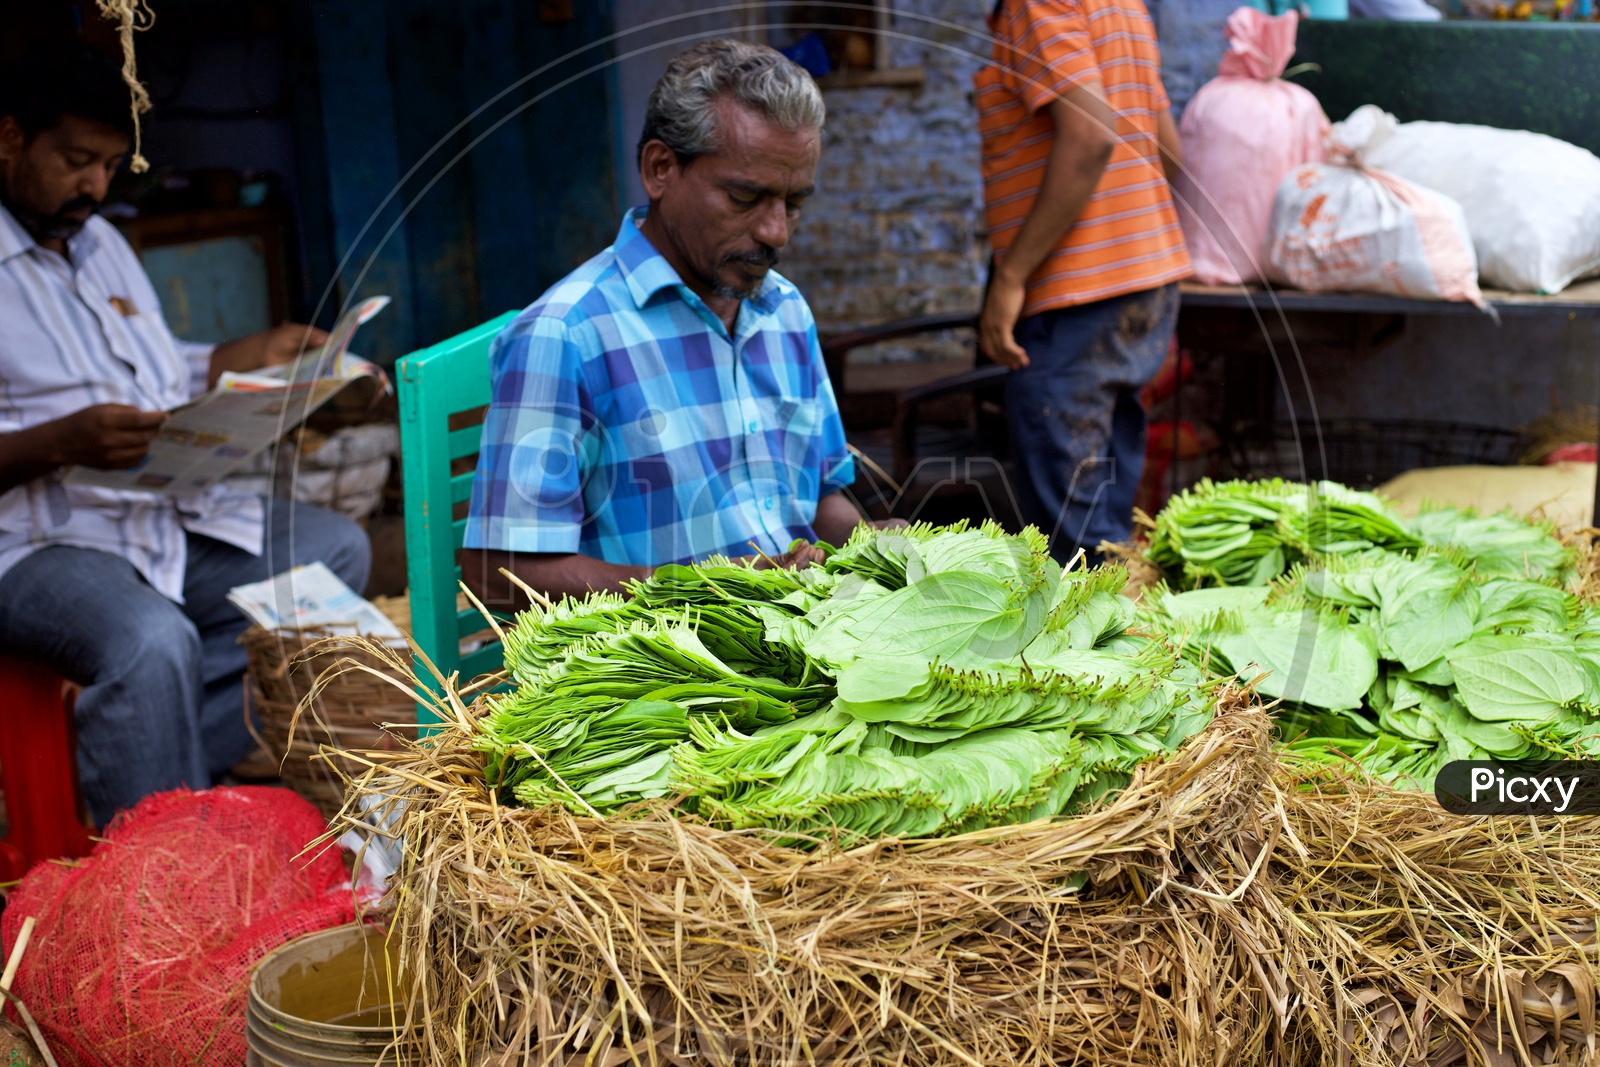 Merchant selling betel leaves.